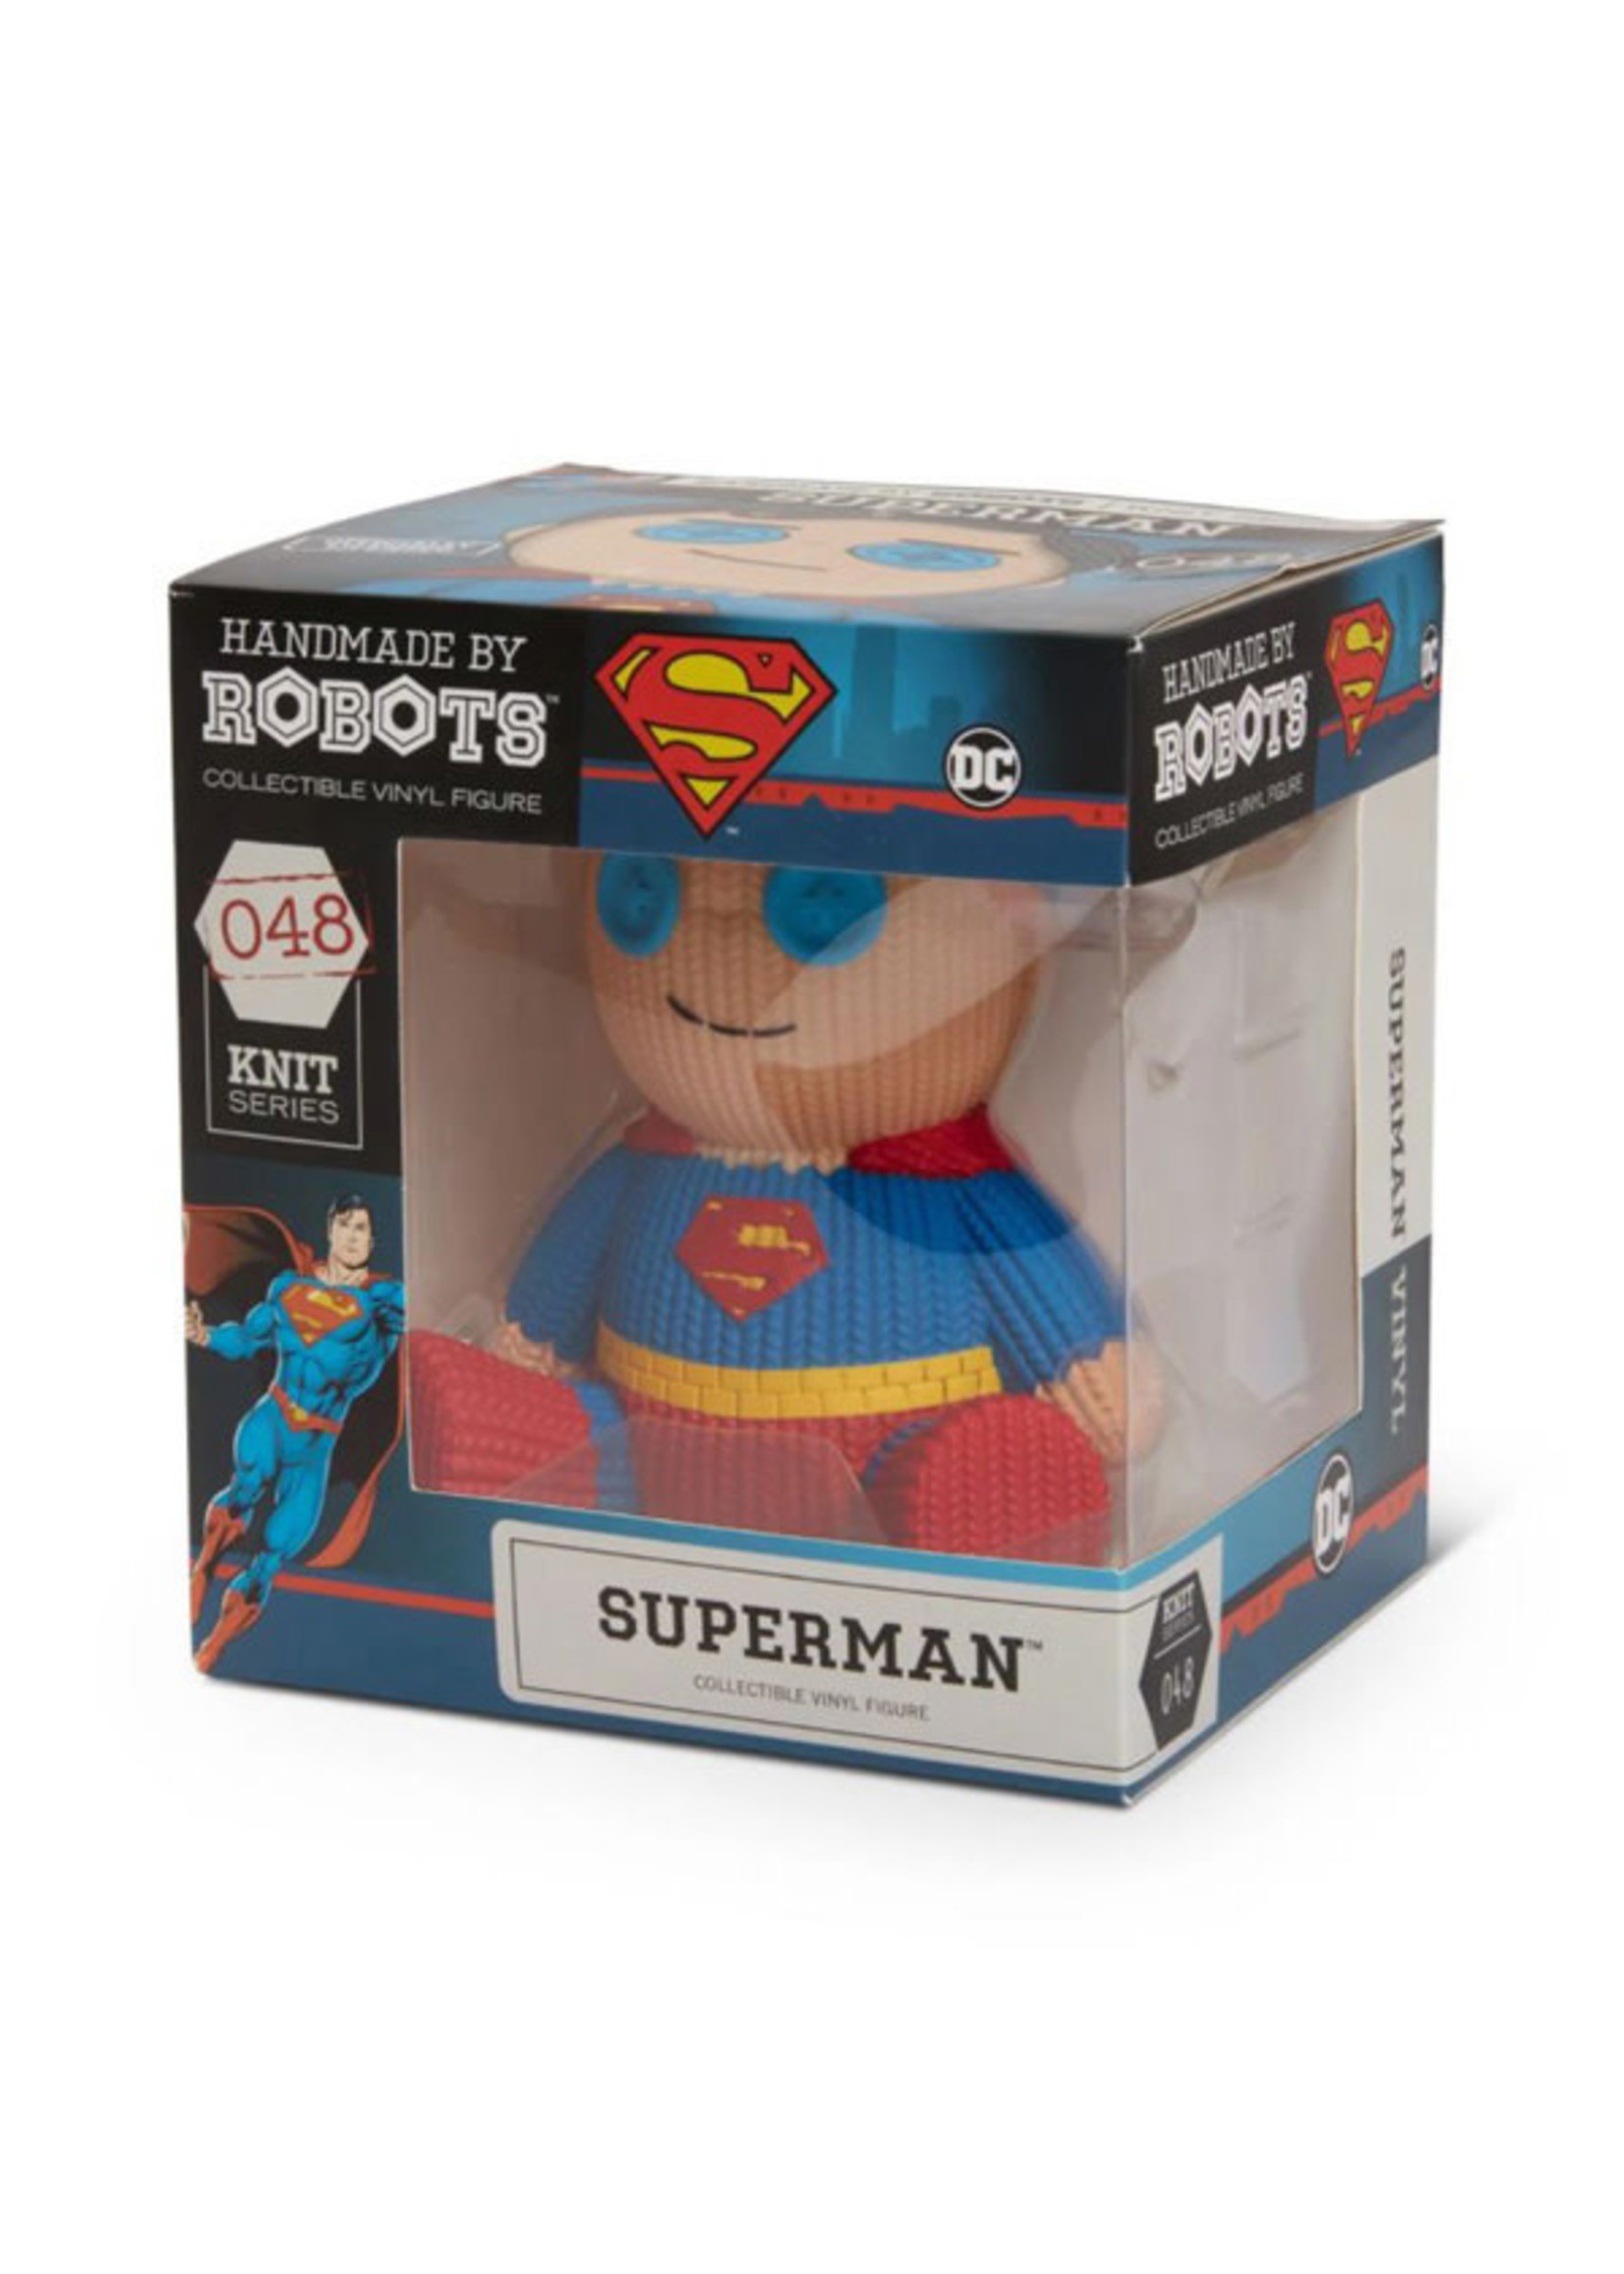 DC COMICS SUPERMAN HANDMADE BY ROBOTS 5